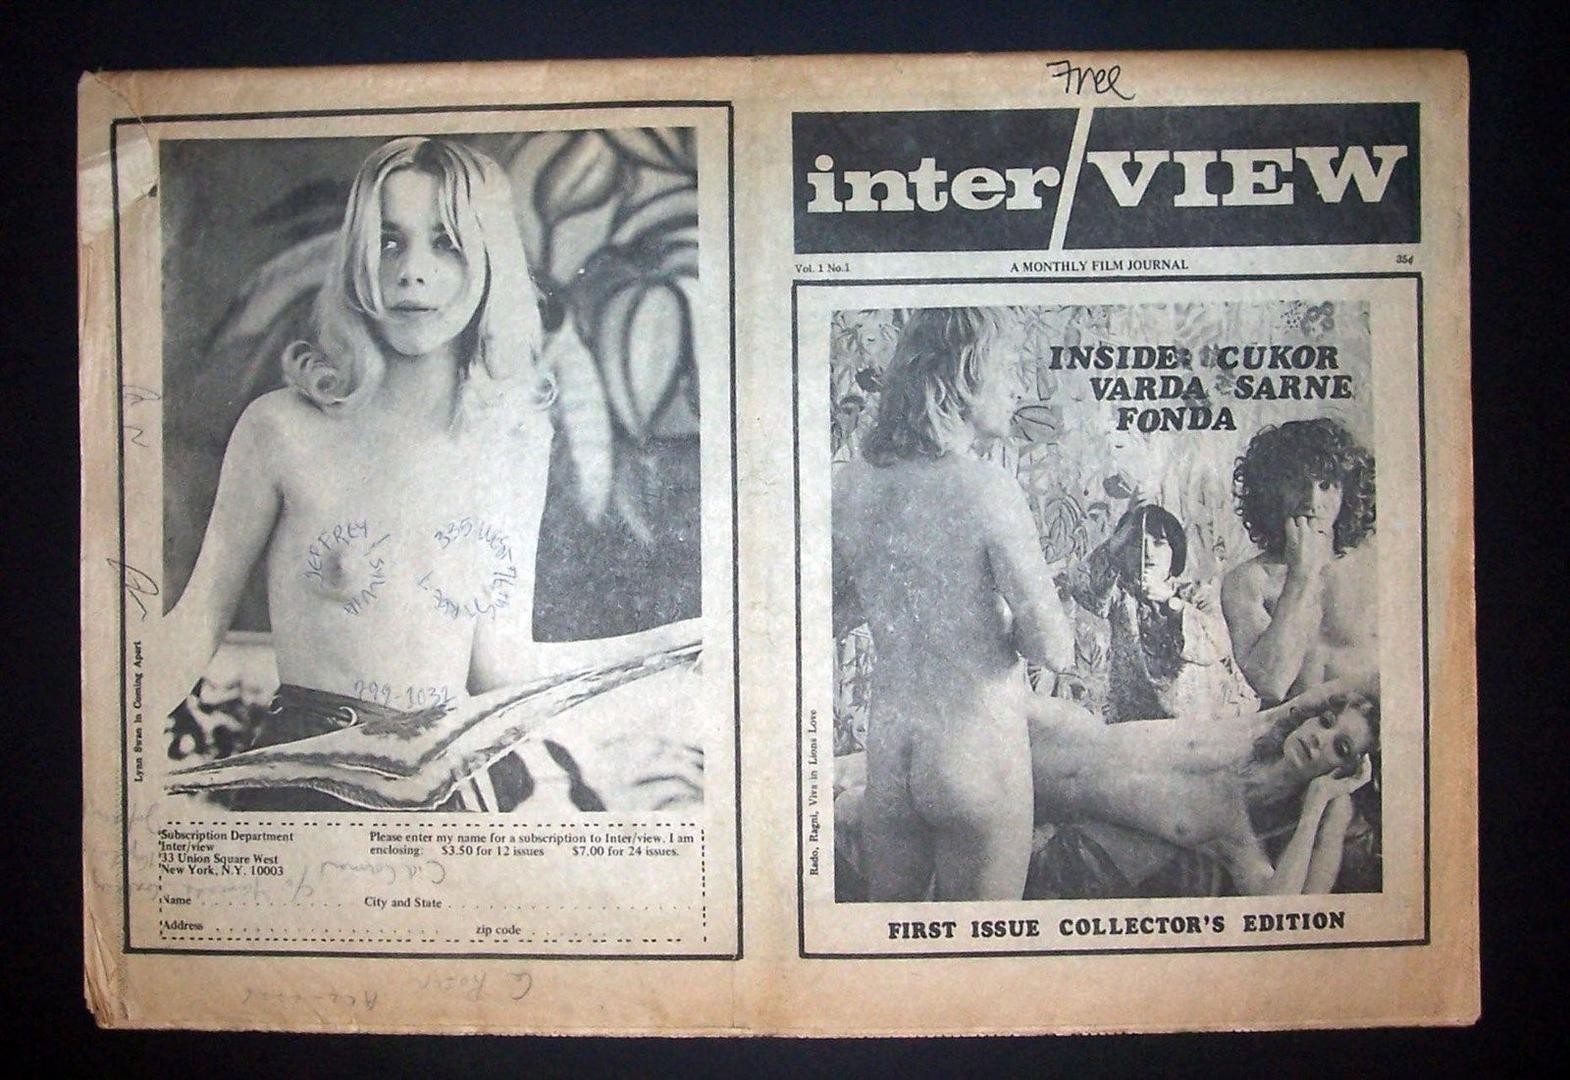 INTERVIEW MAGAZINE 1969 VOL. 1 NO. 1 ANDY WARHOL RARE FIRST ISSUE.jpg